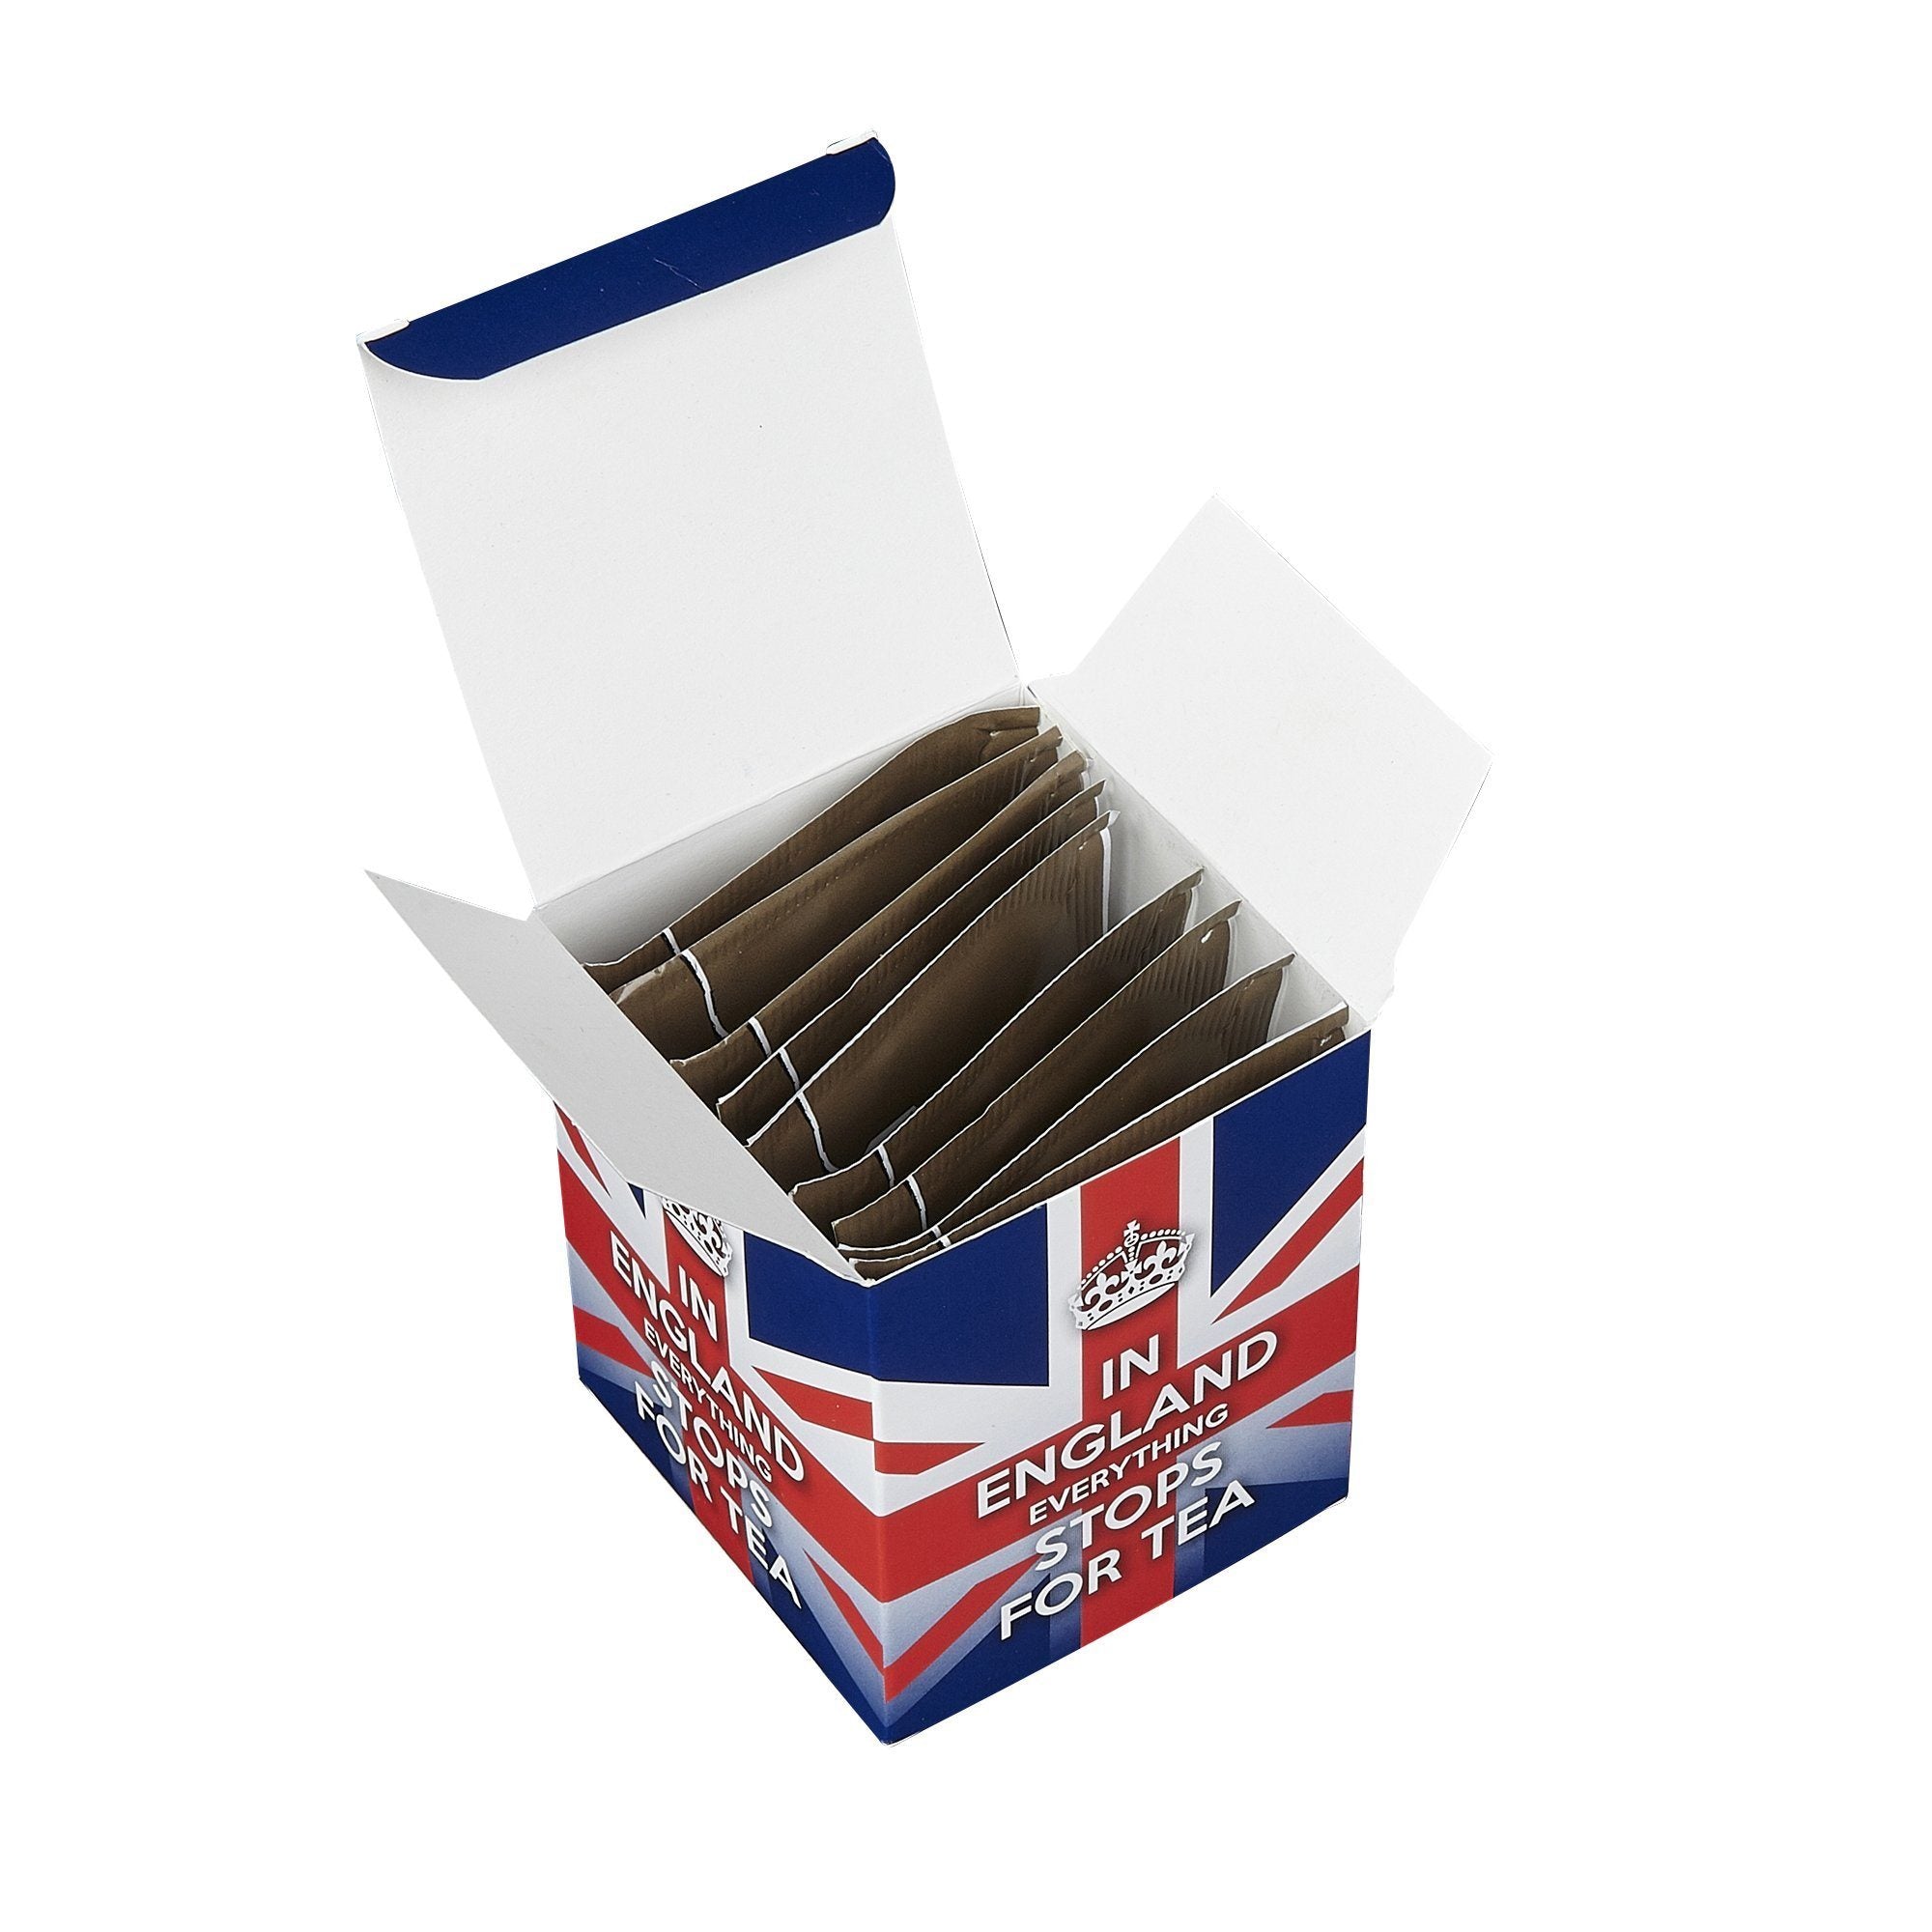 In England Everything Stops For Tea 10 Teabag Carton Black Tea New English Teas 